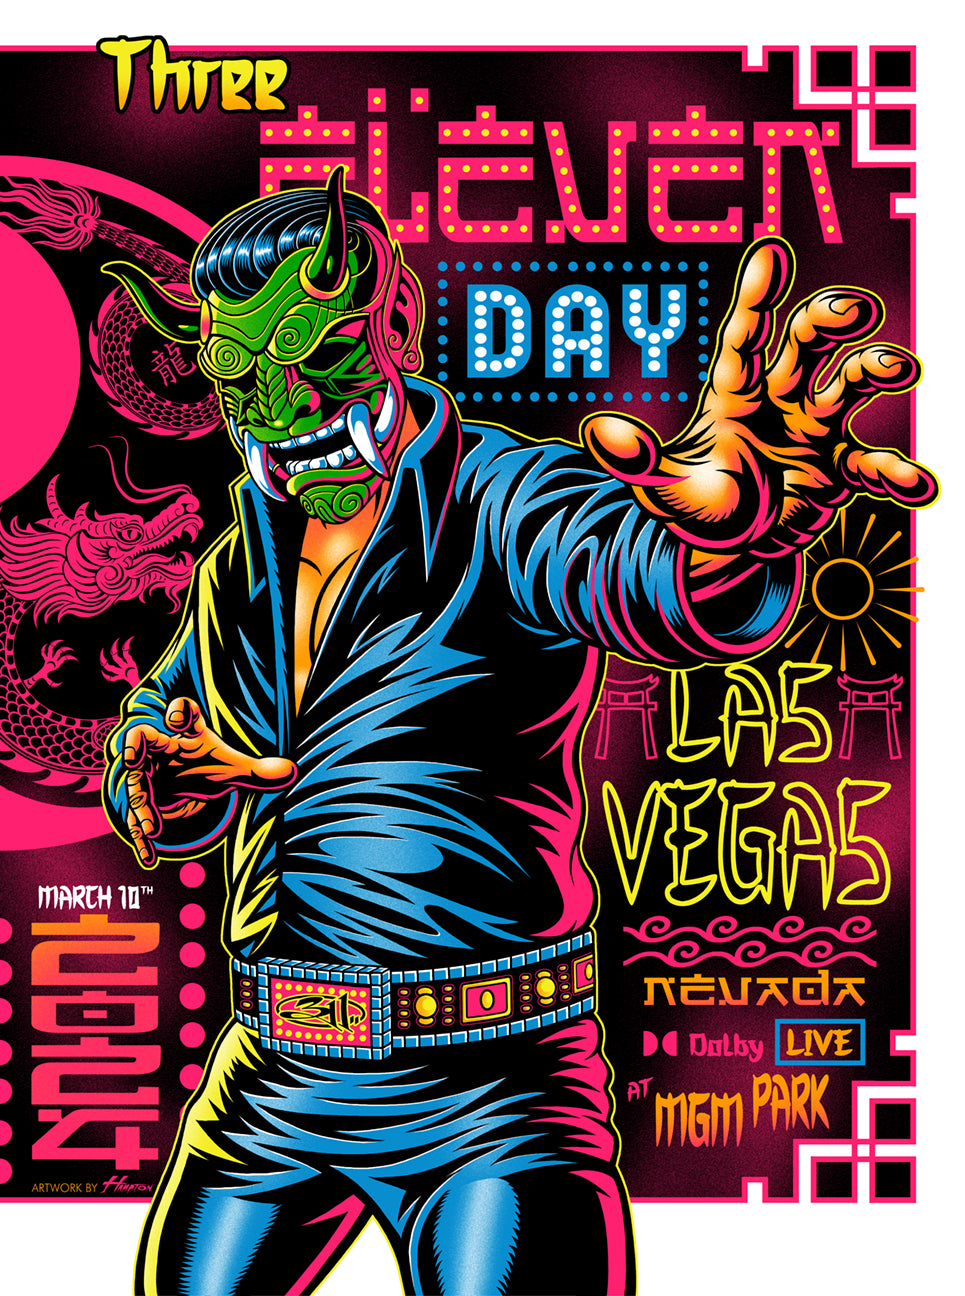 311 Day in Vegas poster